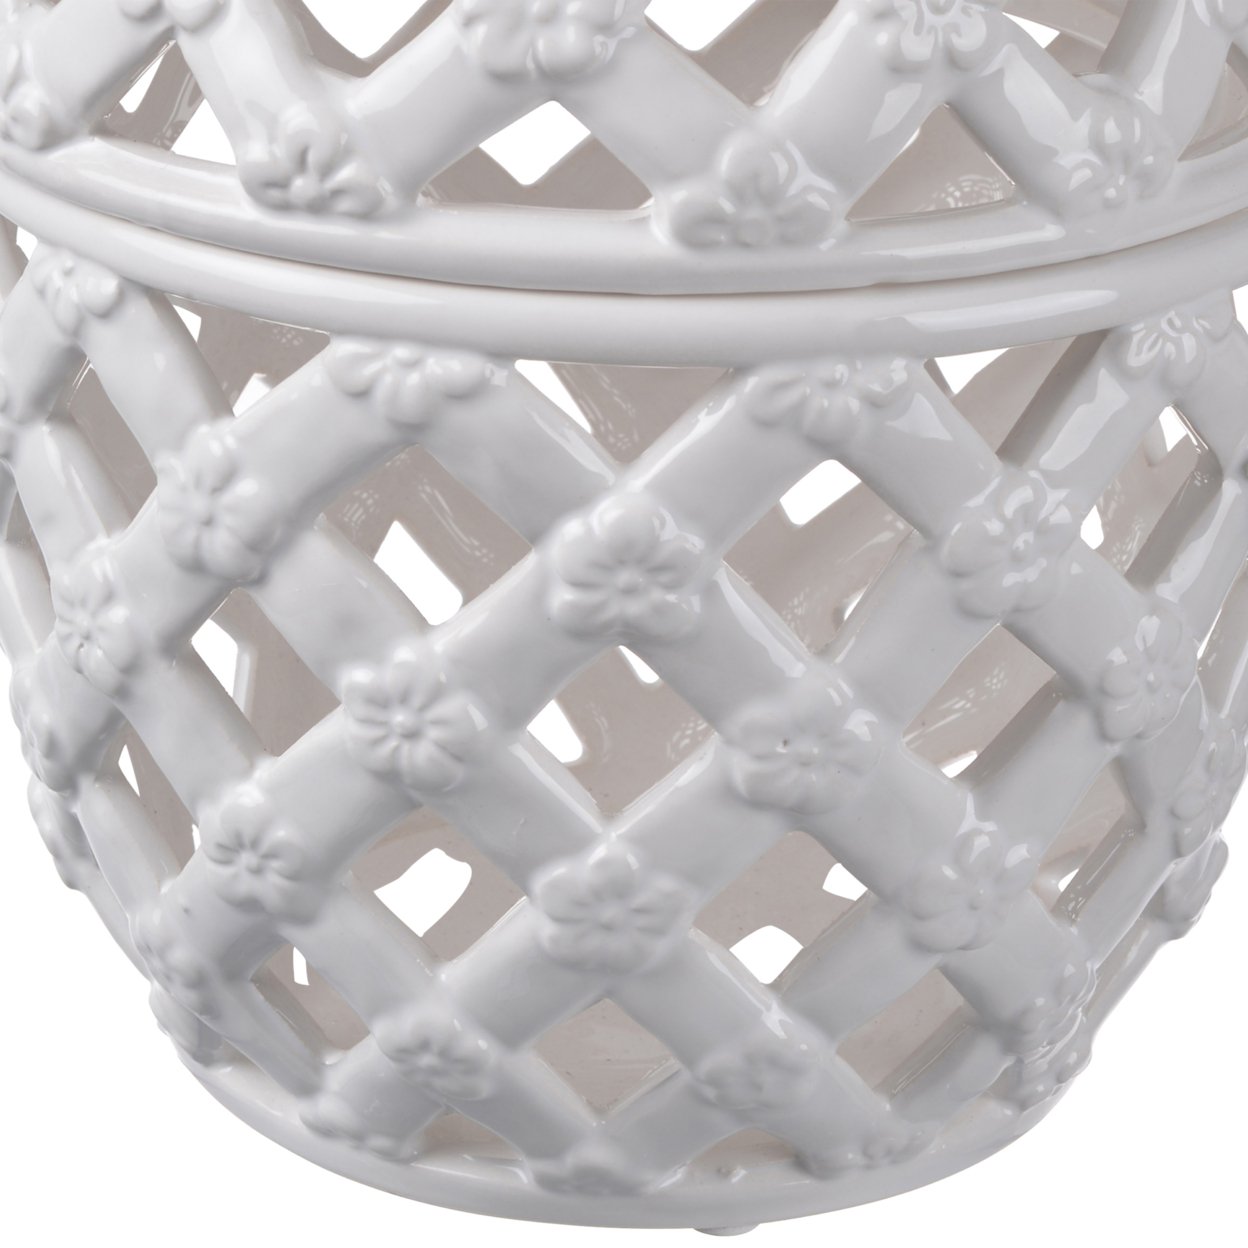 Decorative Ceramic Lidded Jar With Cut Out Texture, Large, White- Saltoro Sherpi